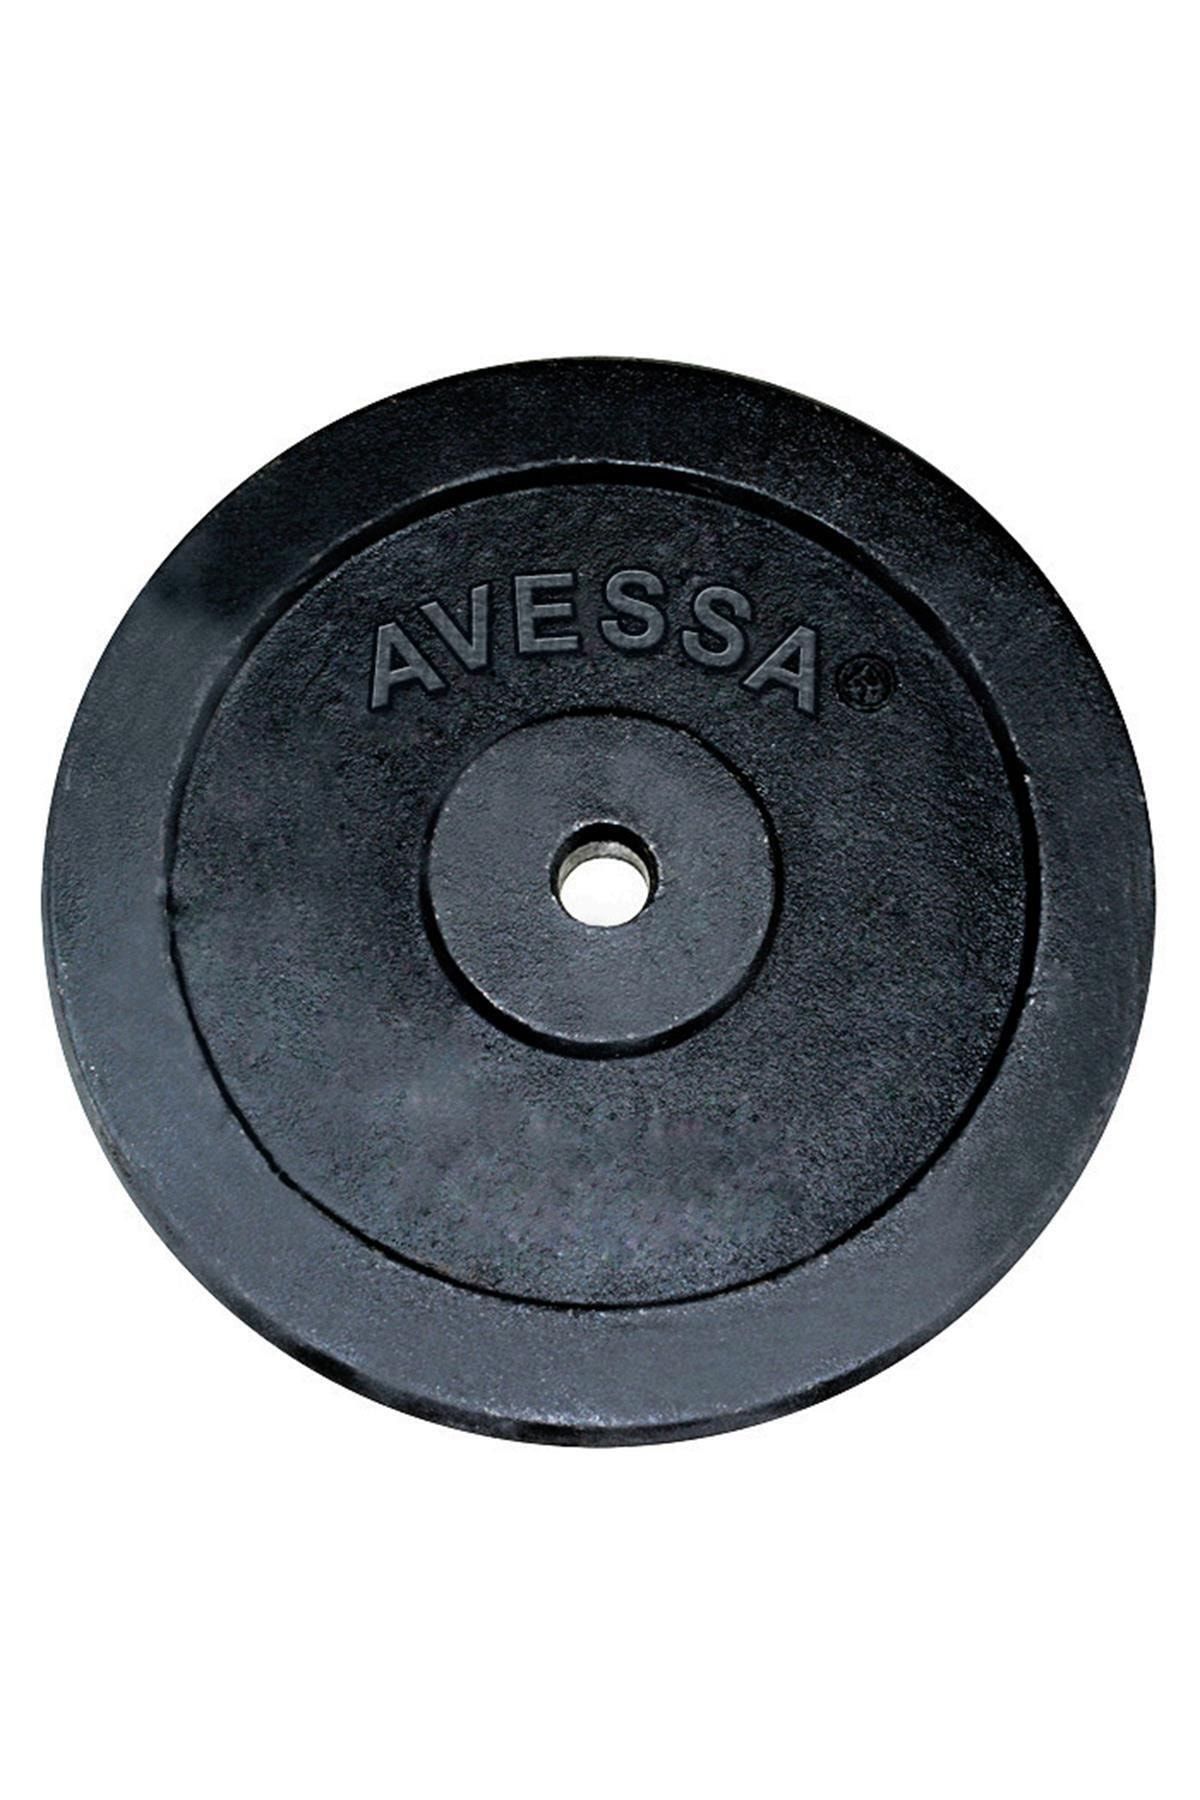 Avessa Siyah Plaka Ağırlık 0.5 Kg